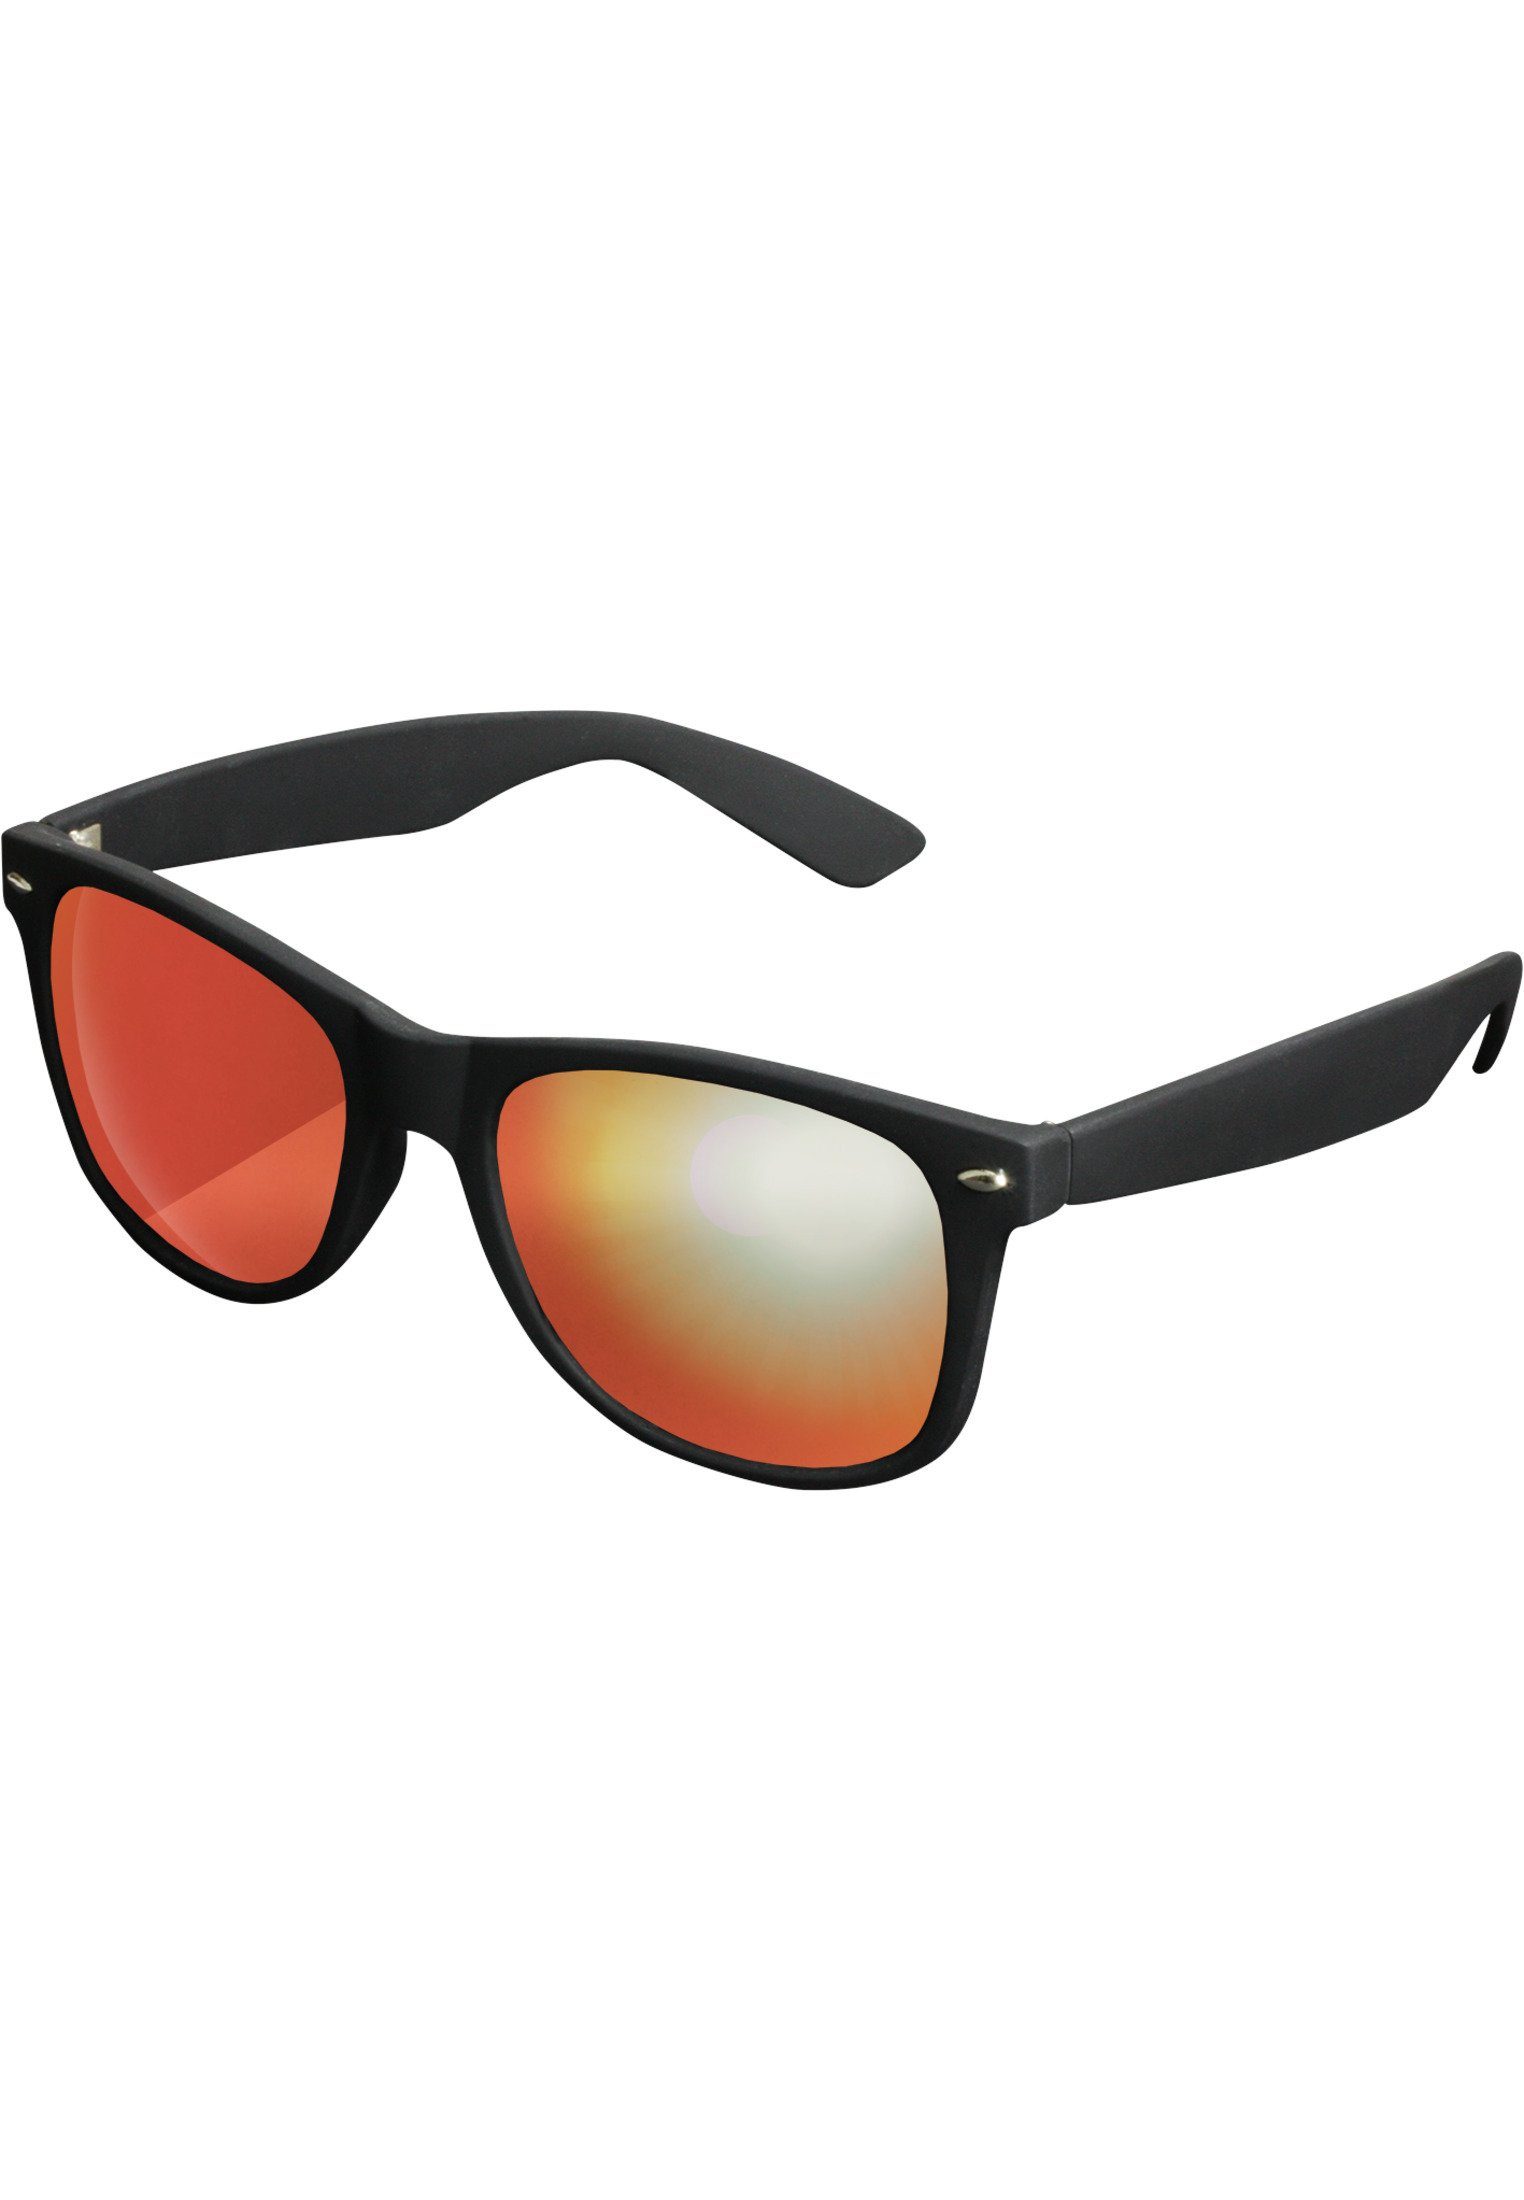 Accessoires Likoma MSTRDS Sonnenbrille Mirror blk/red Sunglasses